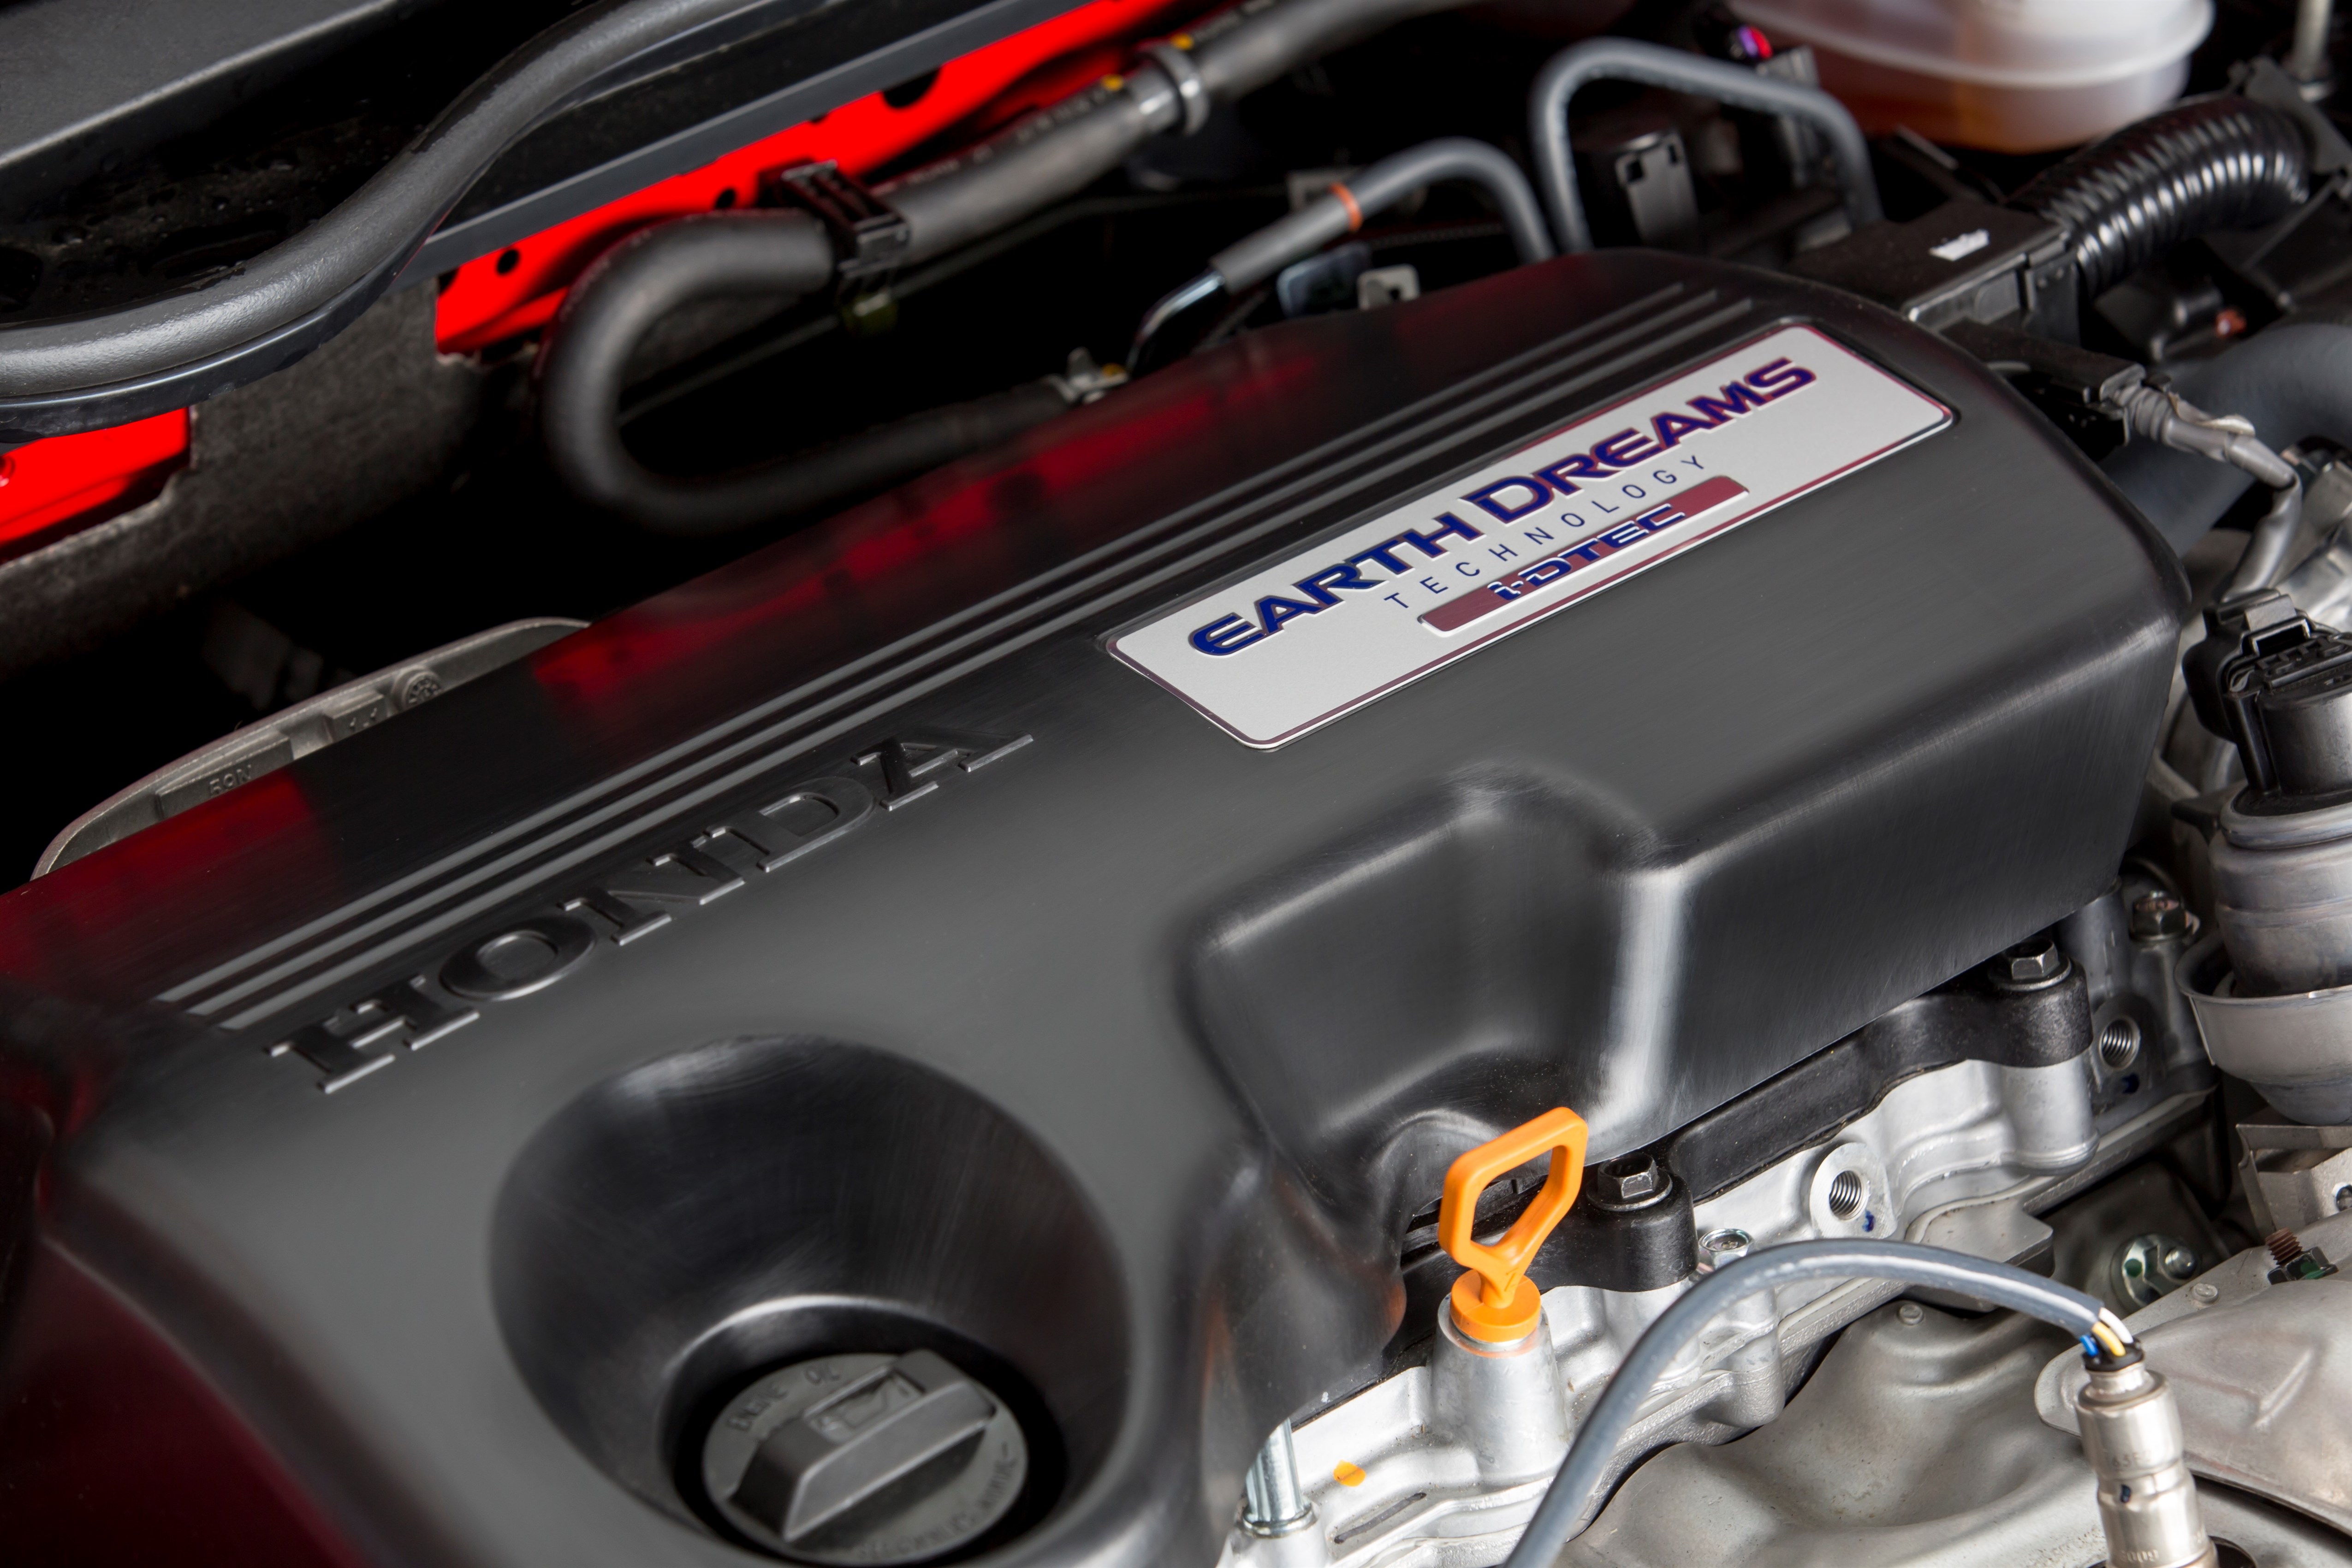 2018 Honda Civic 1.6 iDTEC Turbo Diesel Engine